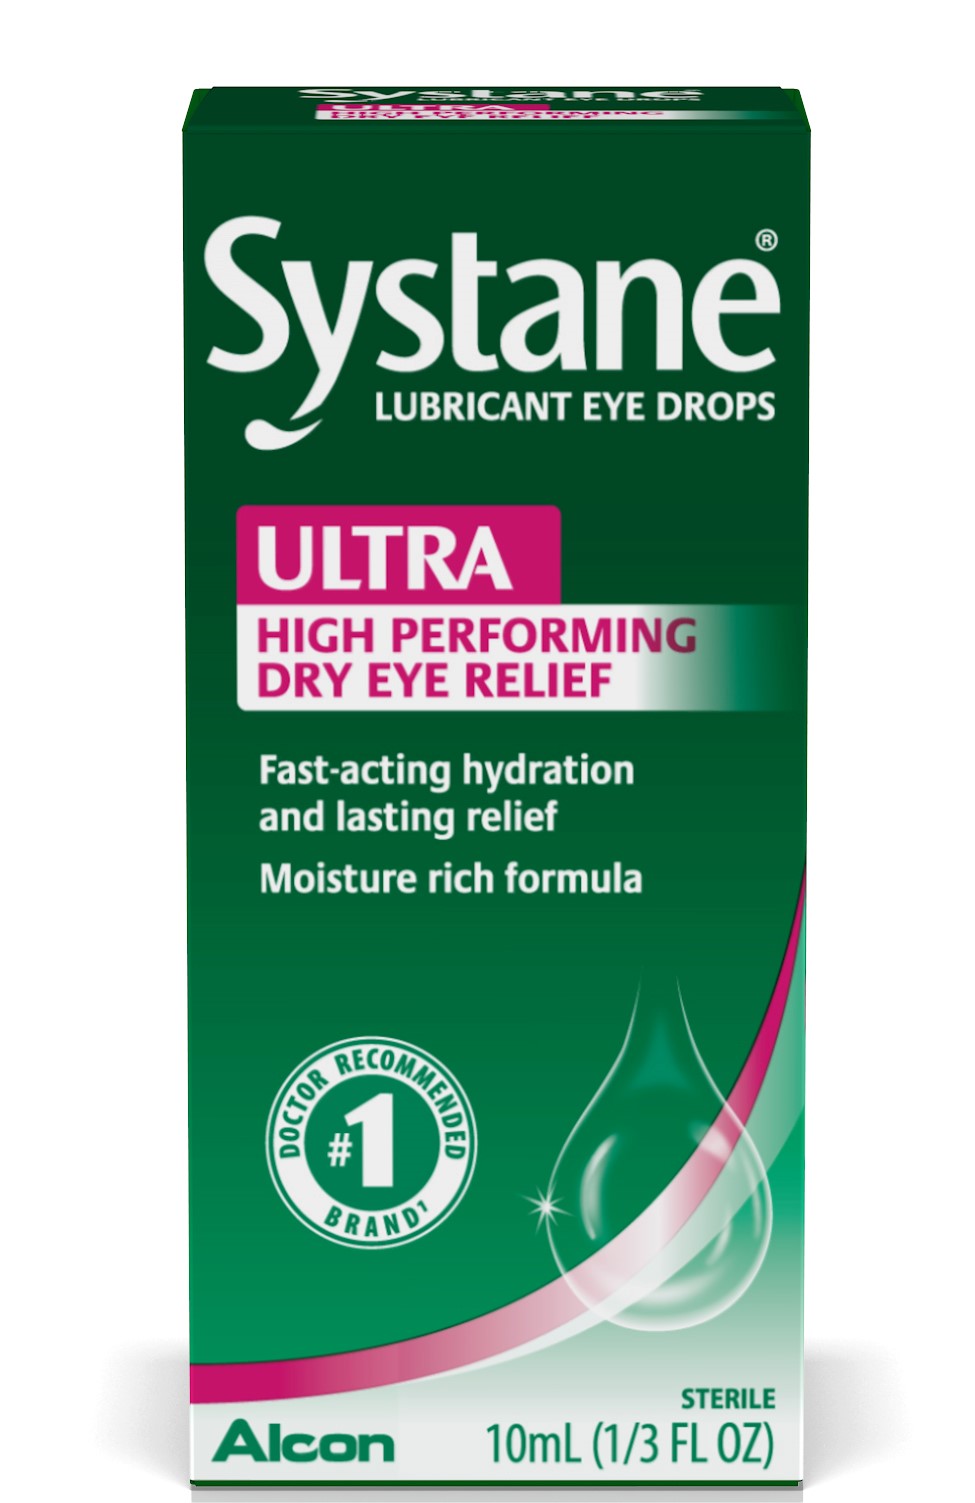 SYSTANE® ULTRA Lubricant Eye Drops